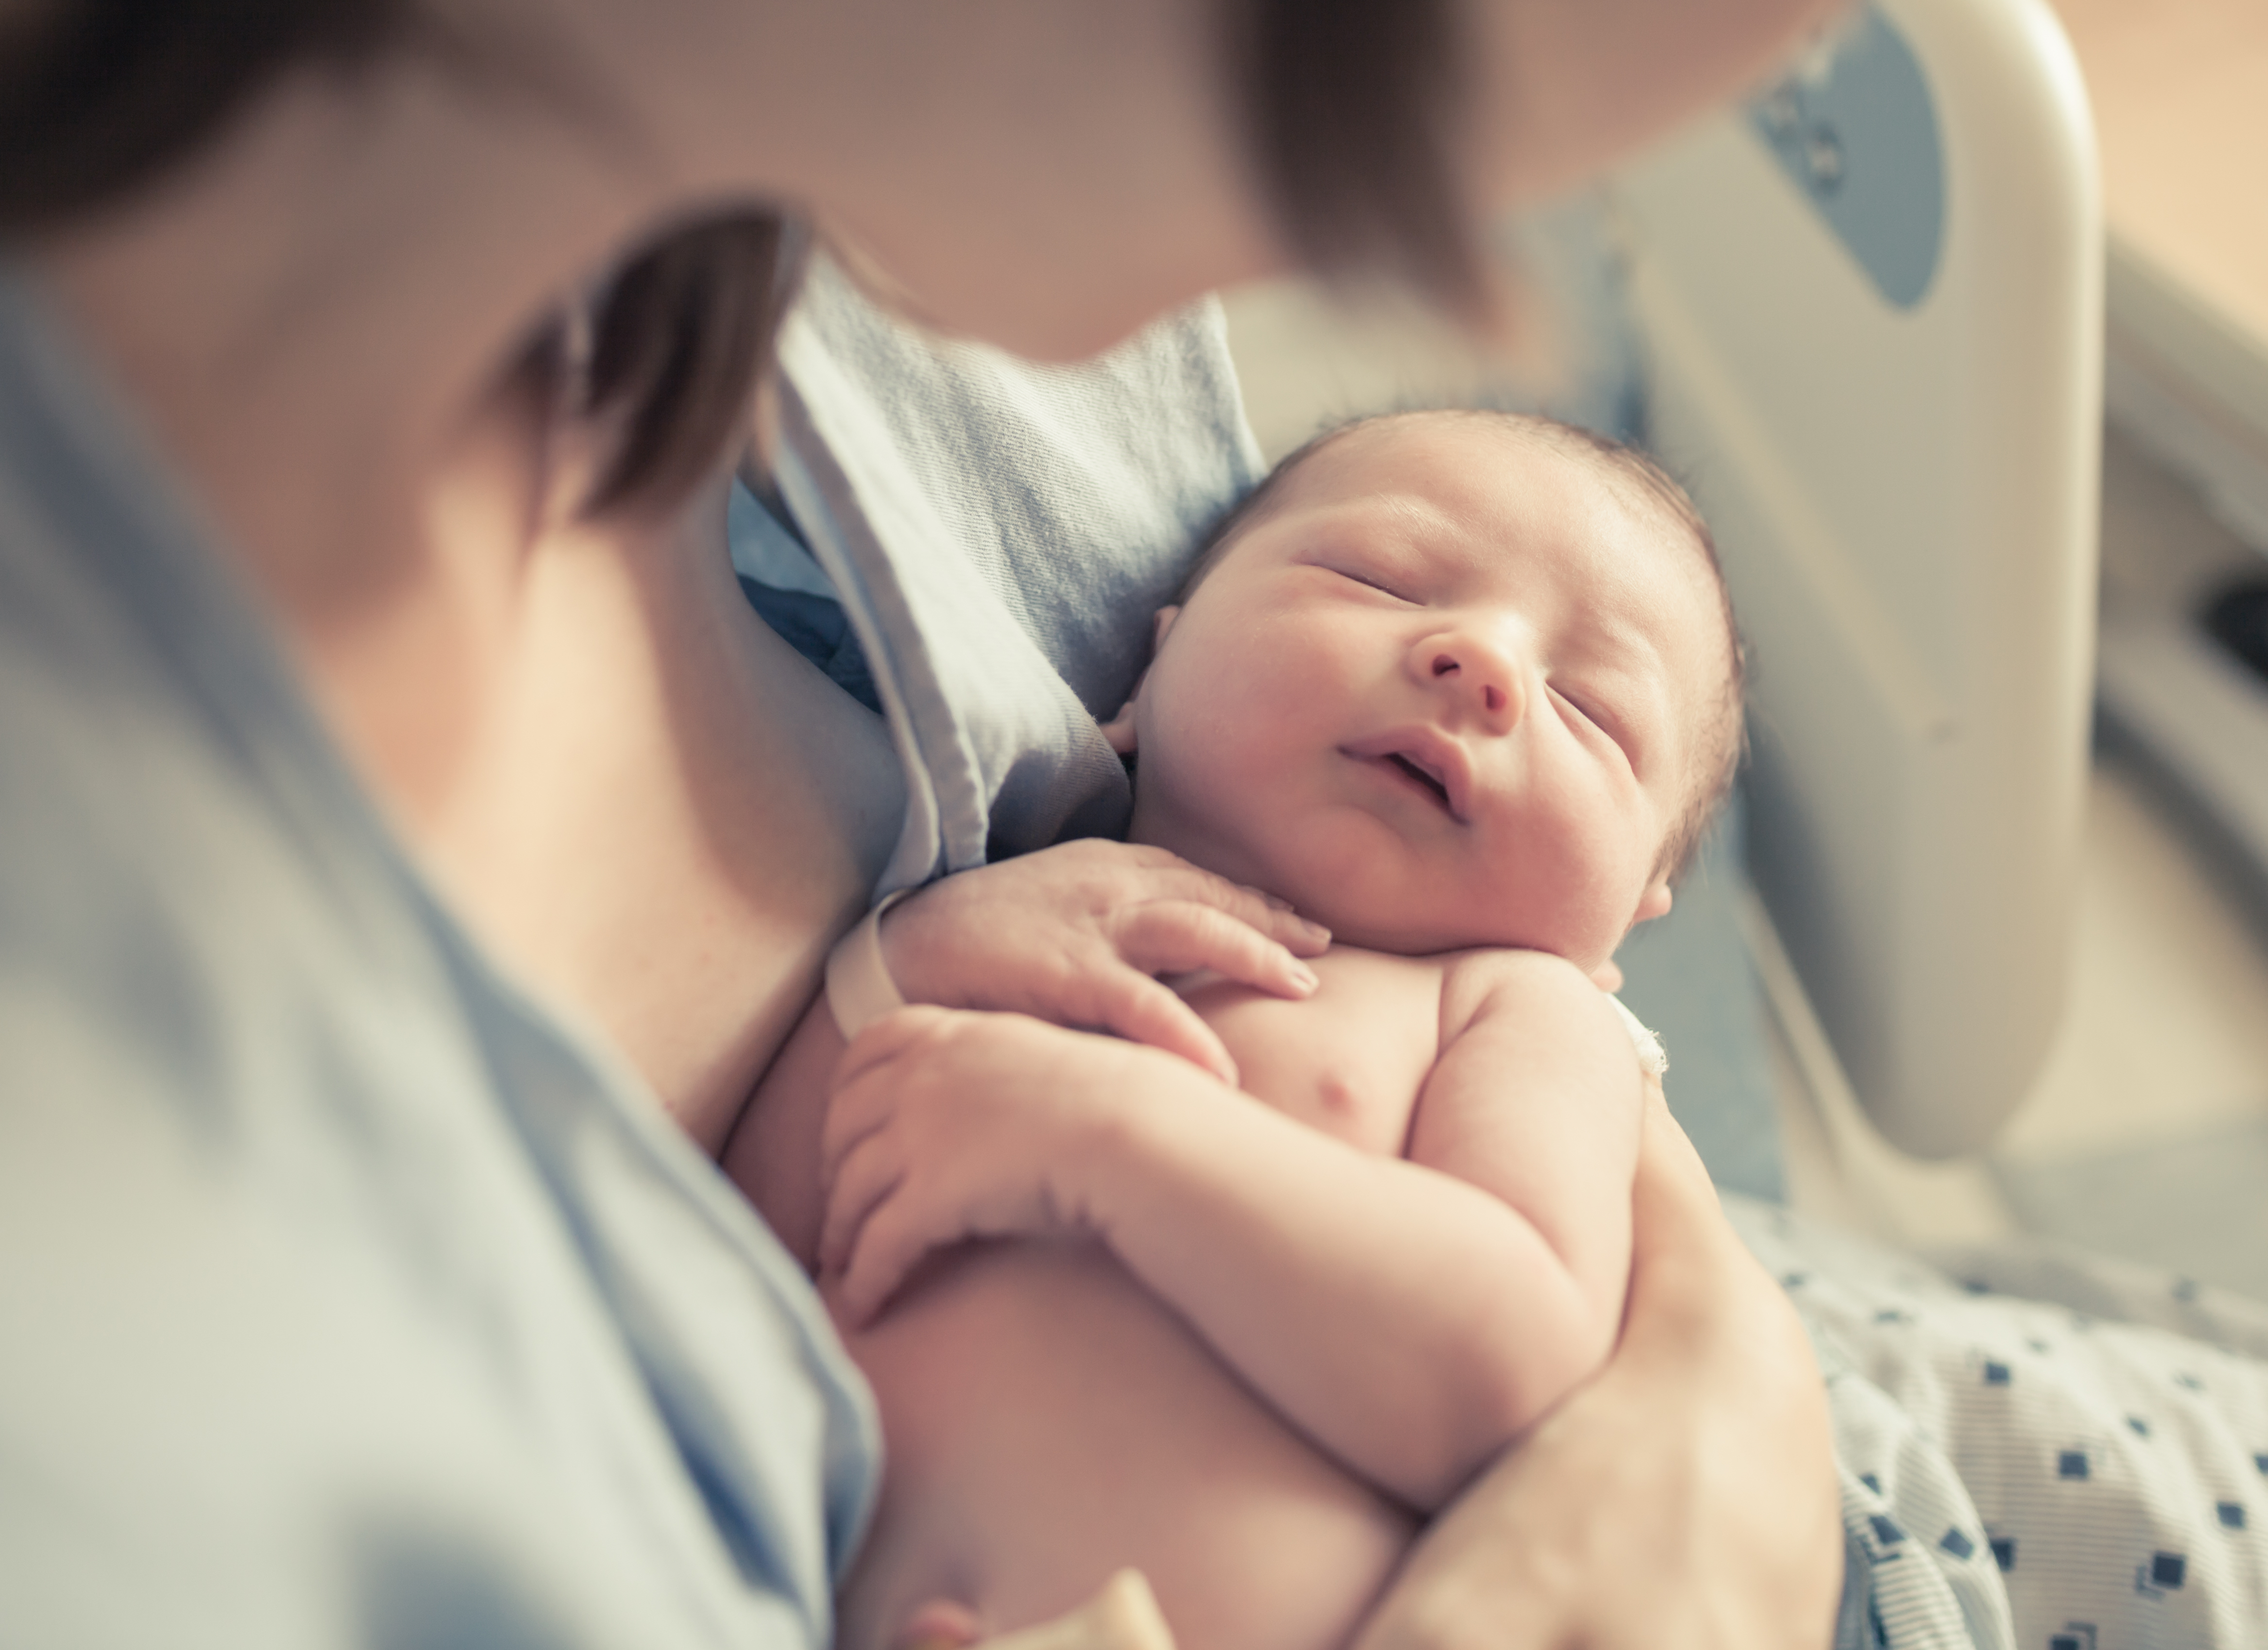 A mother cradling her newborn baby | Source: Shutterstock